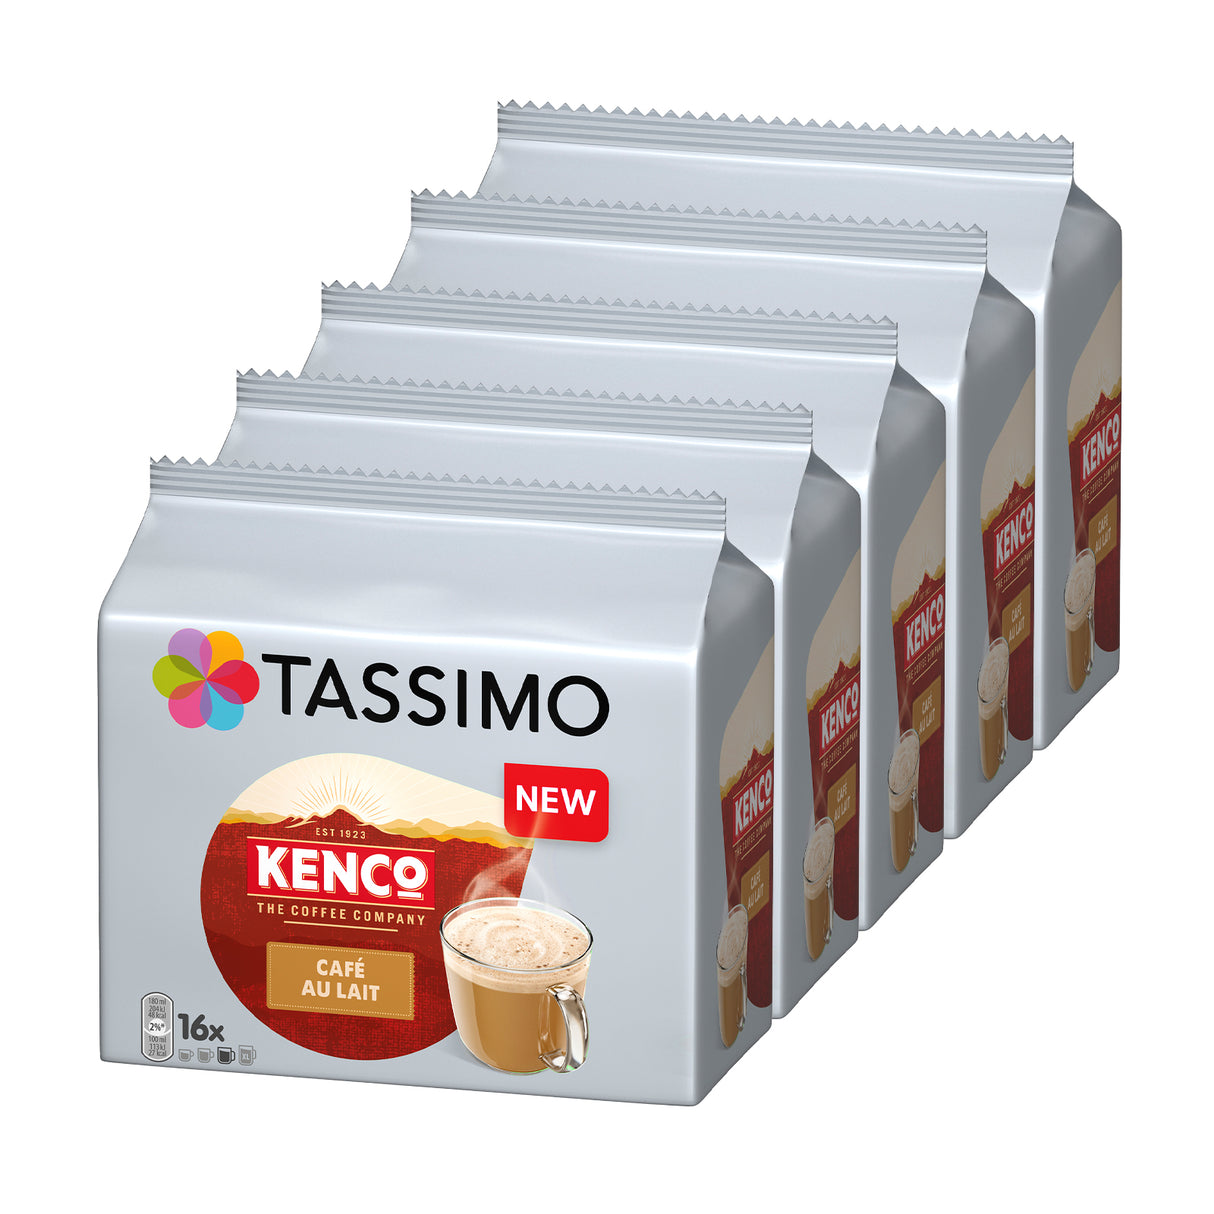 Tassimo Kenco Cafe Au Lait 5pack